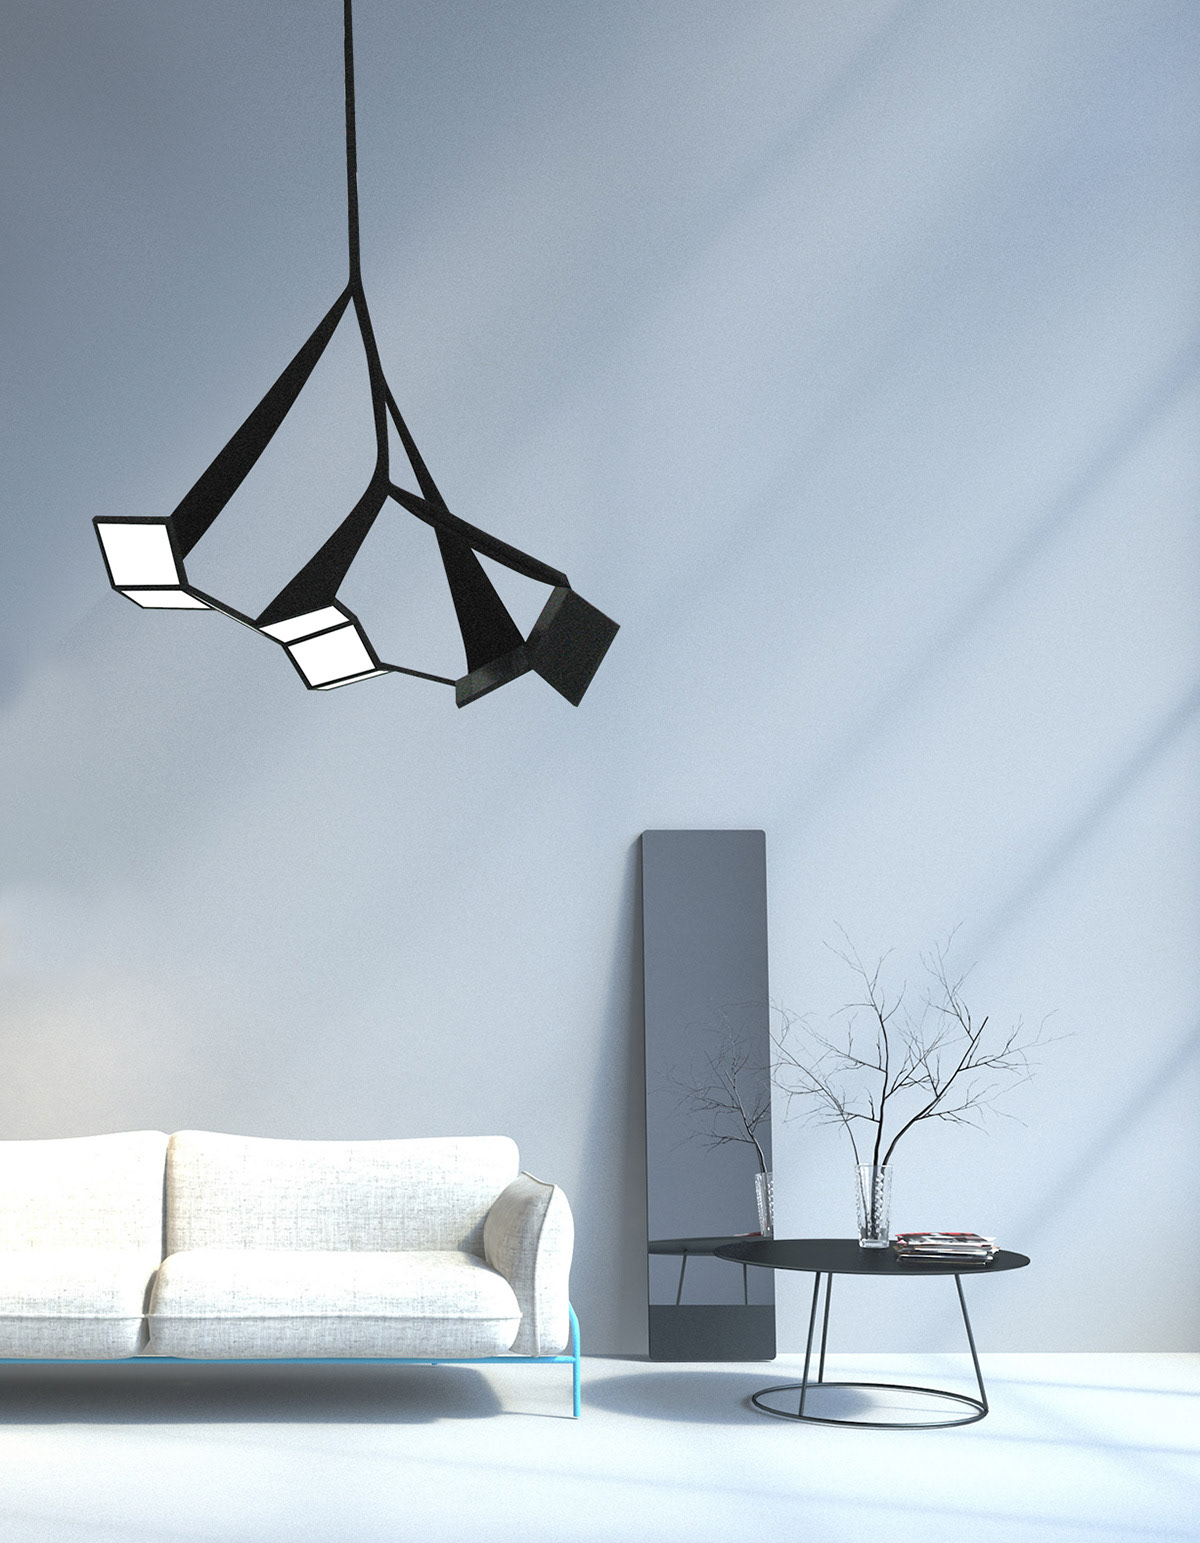 2dodesign ANGELA ANGELINA EBERHARDT Dietmar Fissl 3D knitting lampshade led OLED pendant textile